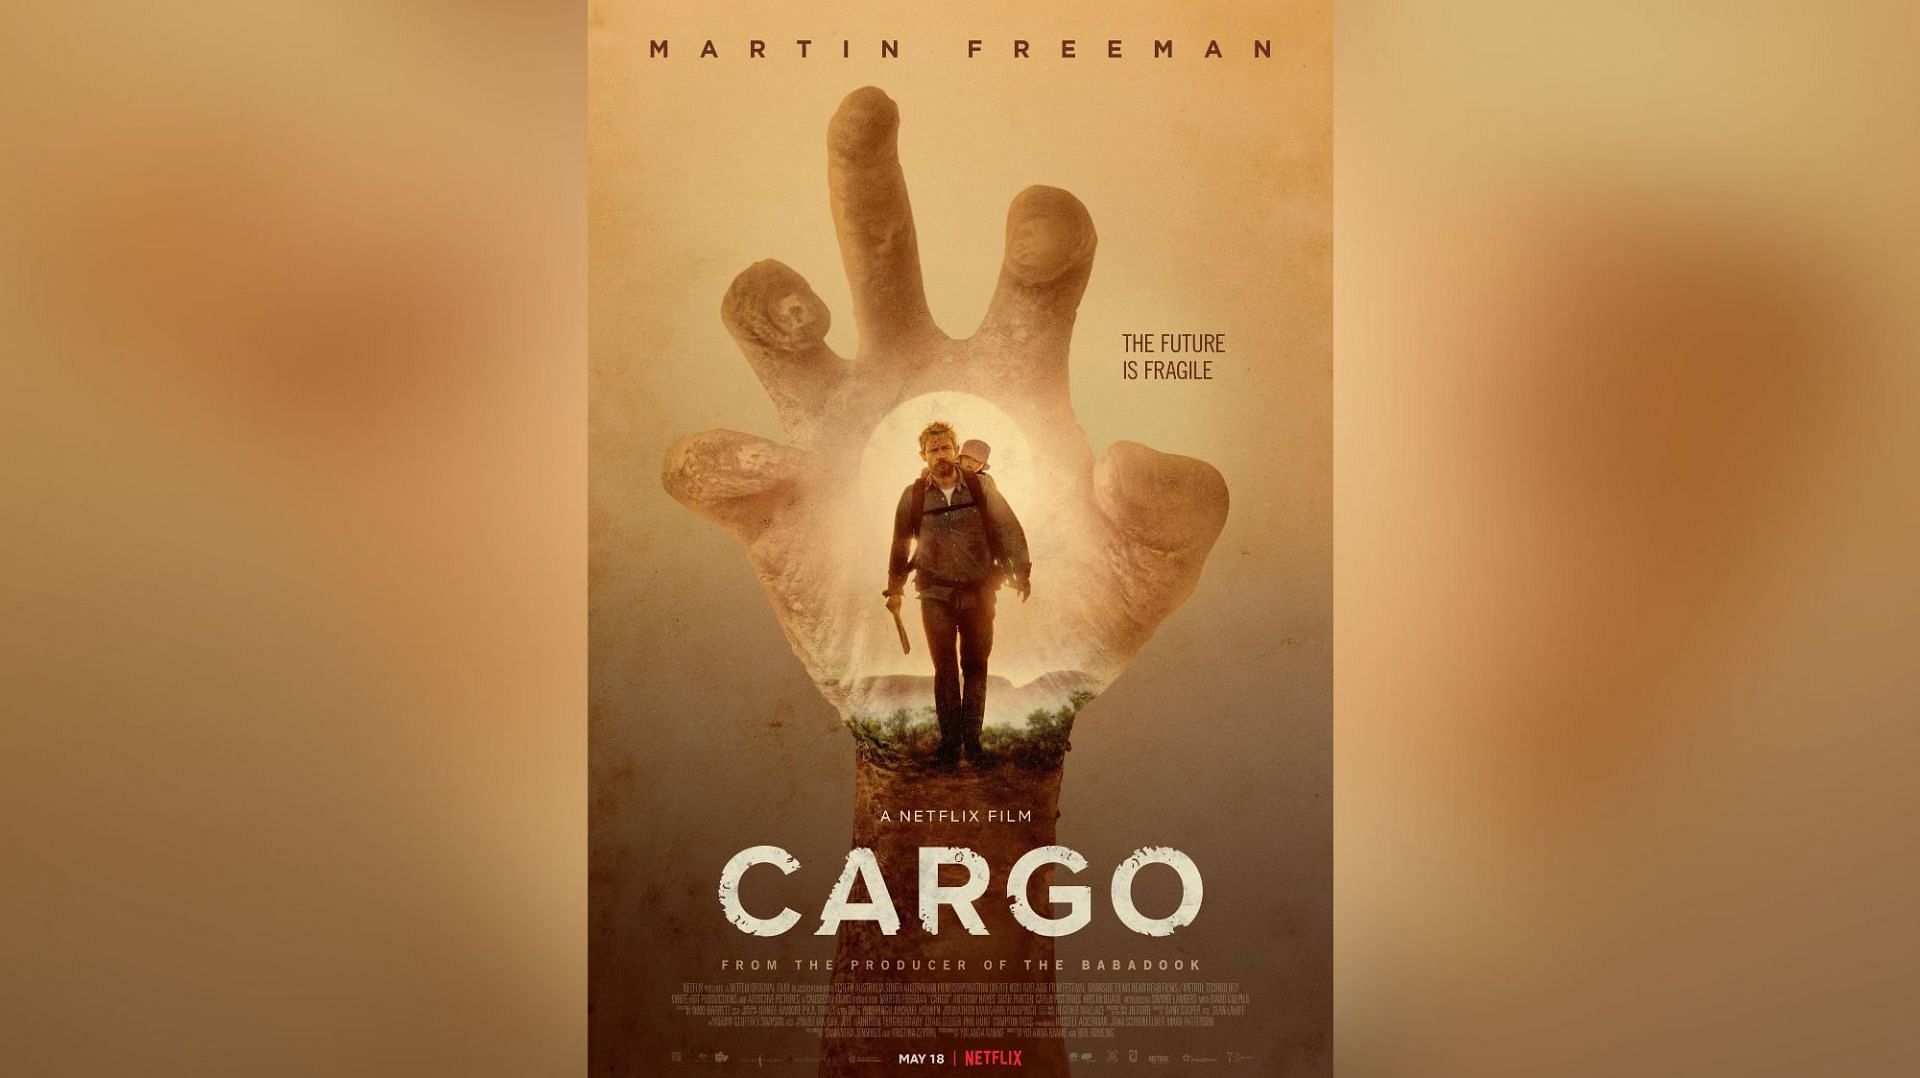 Cargo (Image via Netflix)